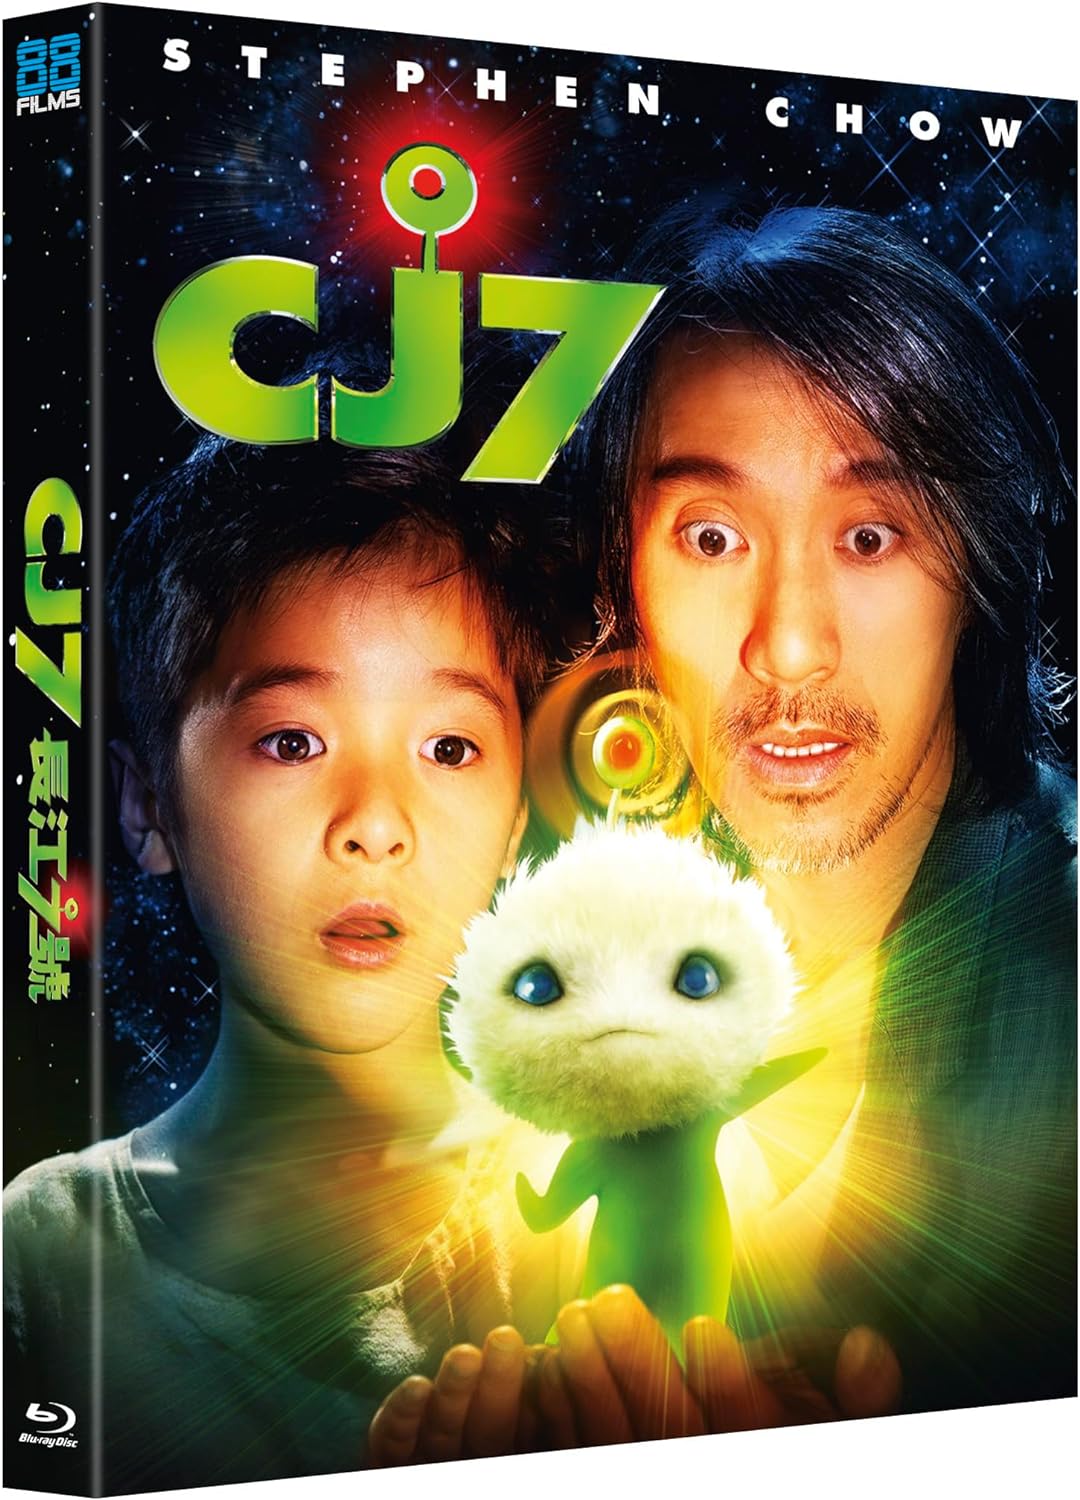 CJ7 Blu-ray with Slipcover (88 FIlms/Region B) [Preorder]